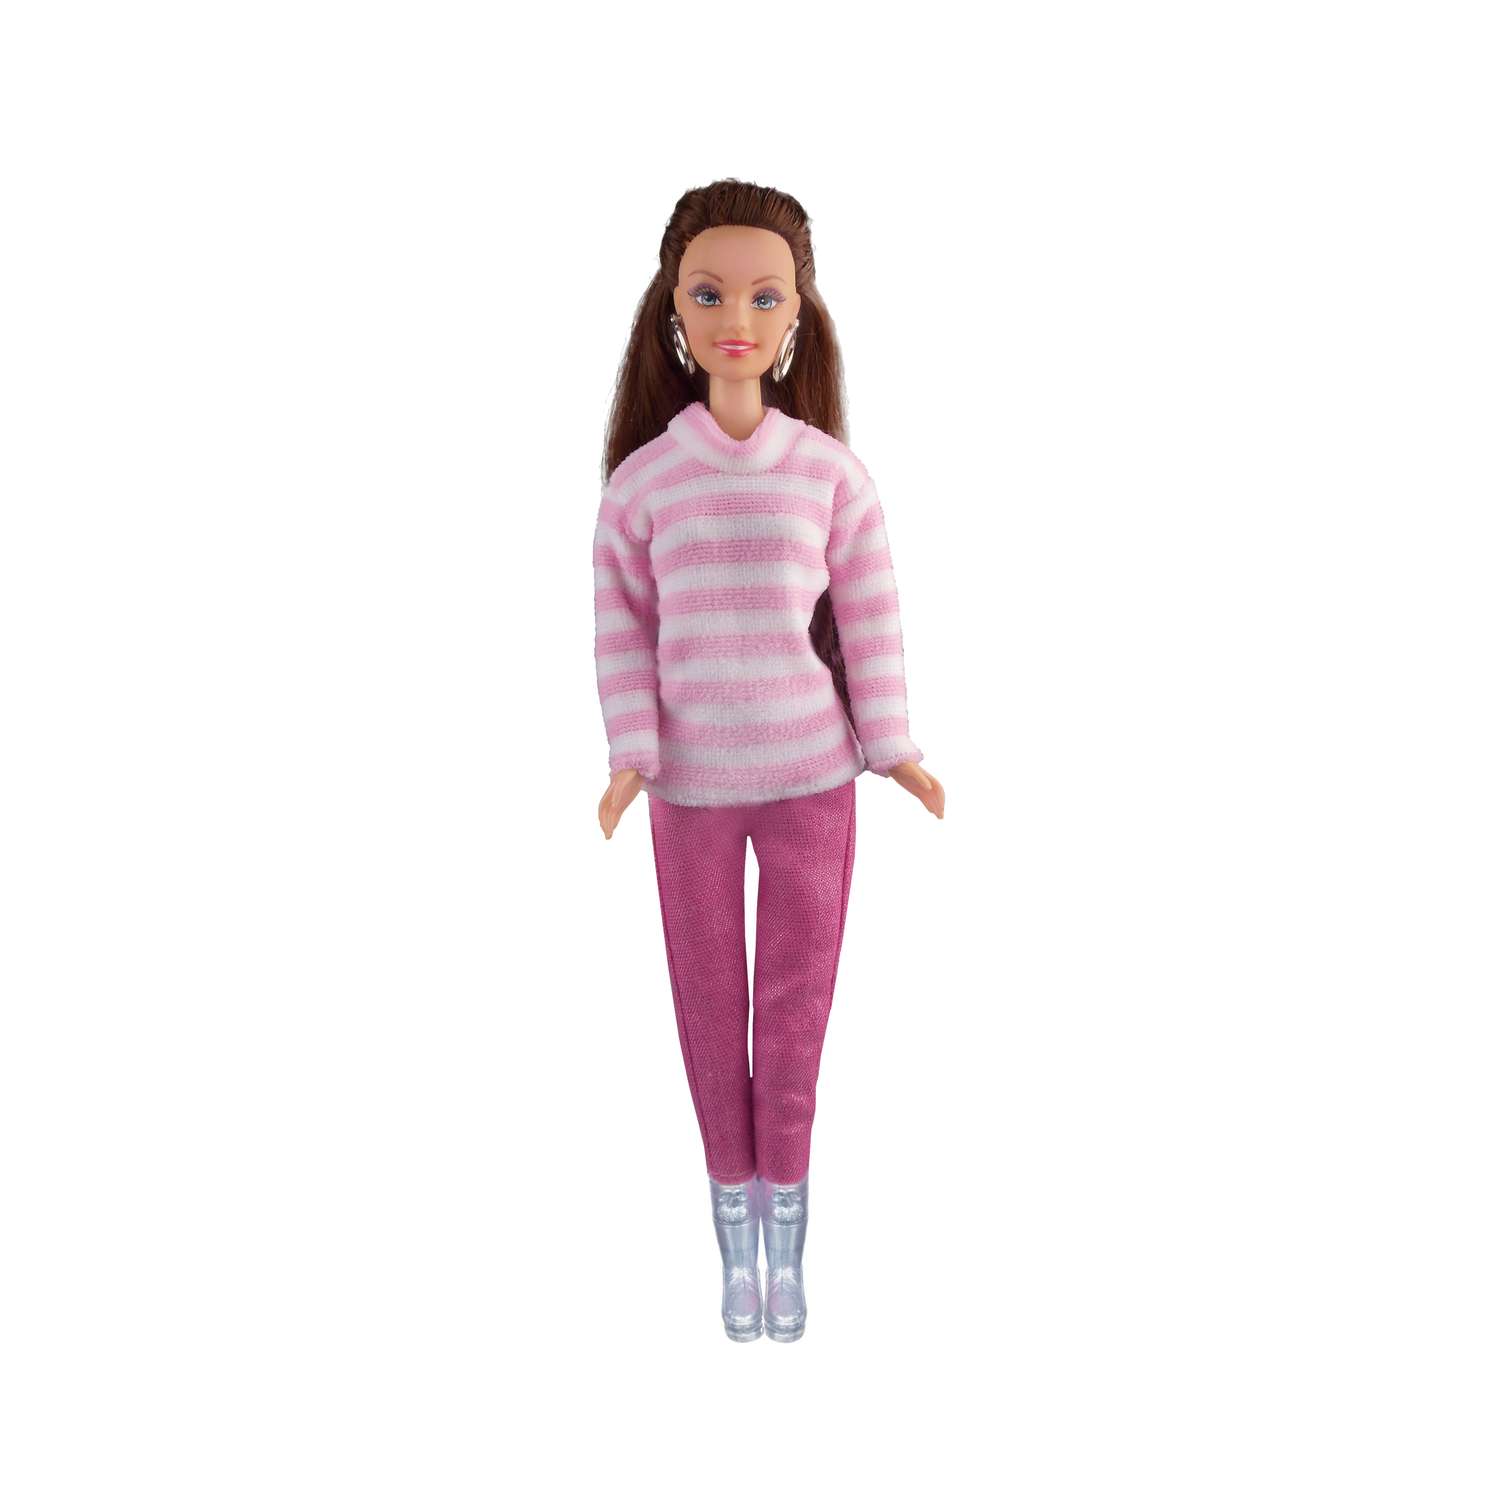 Кукла ToysLab Ася Зимняя красавица 28 см вариант 1 35130 - фото 1